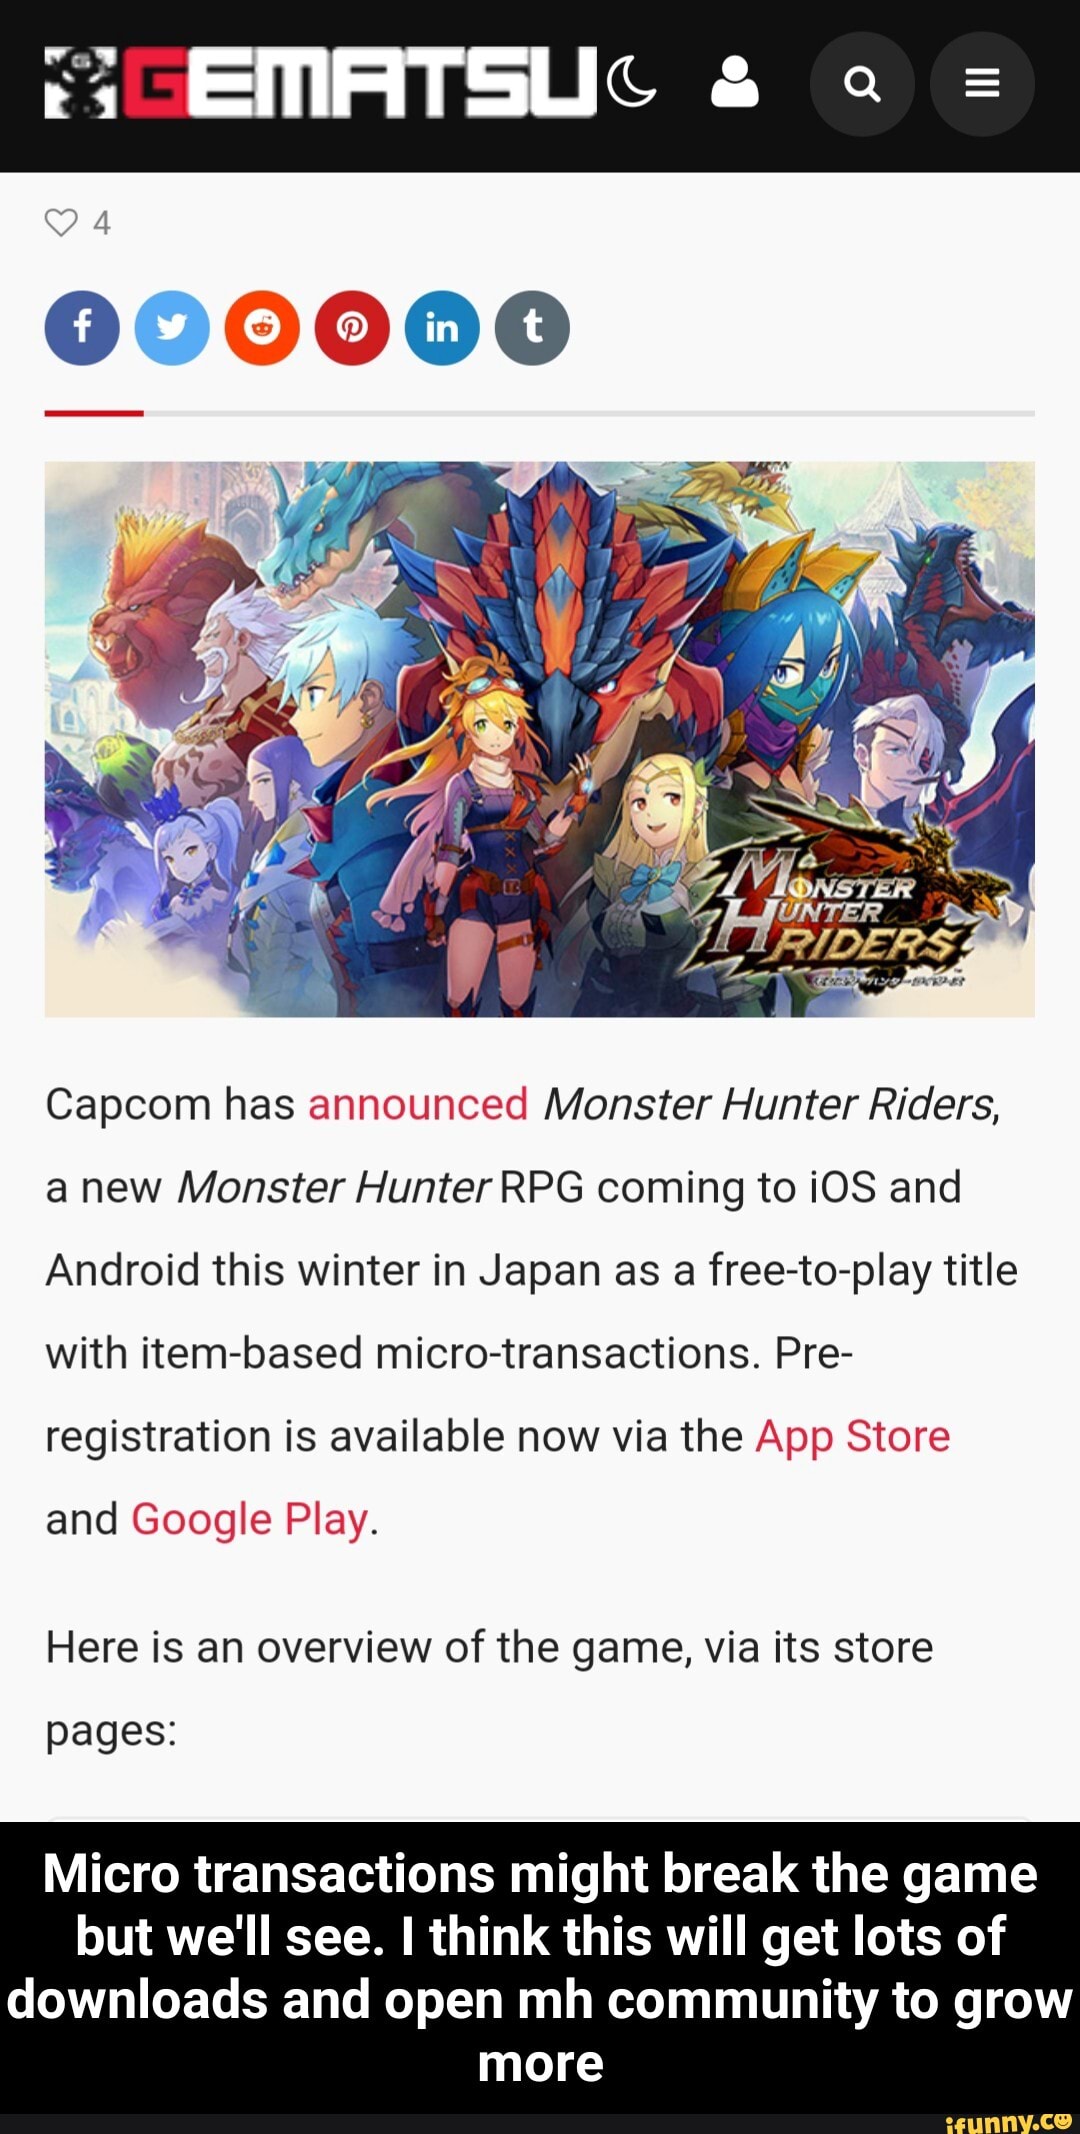 Monster Hunter Now - Apps on Google Play